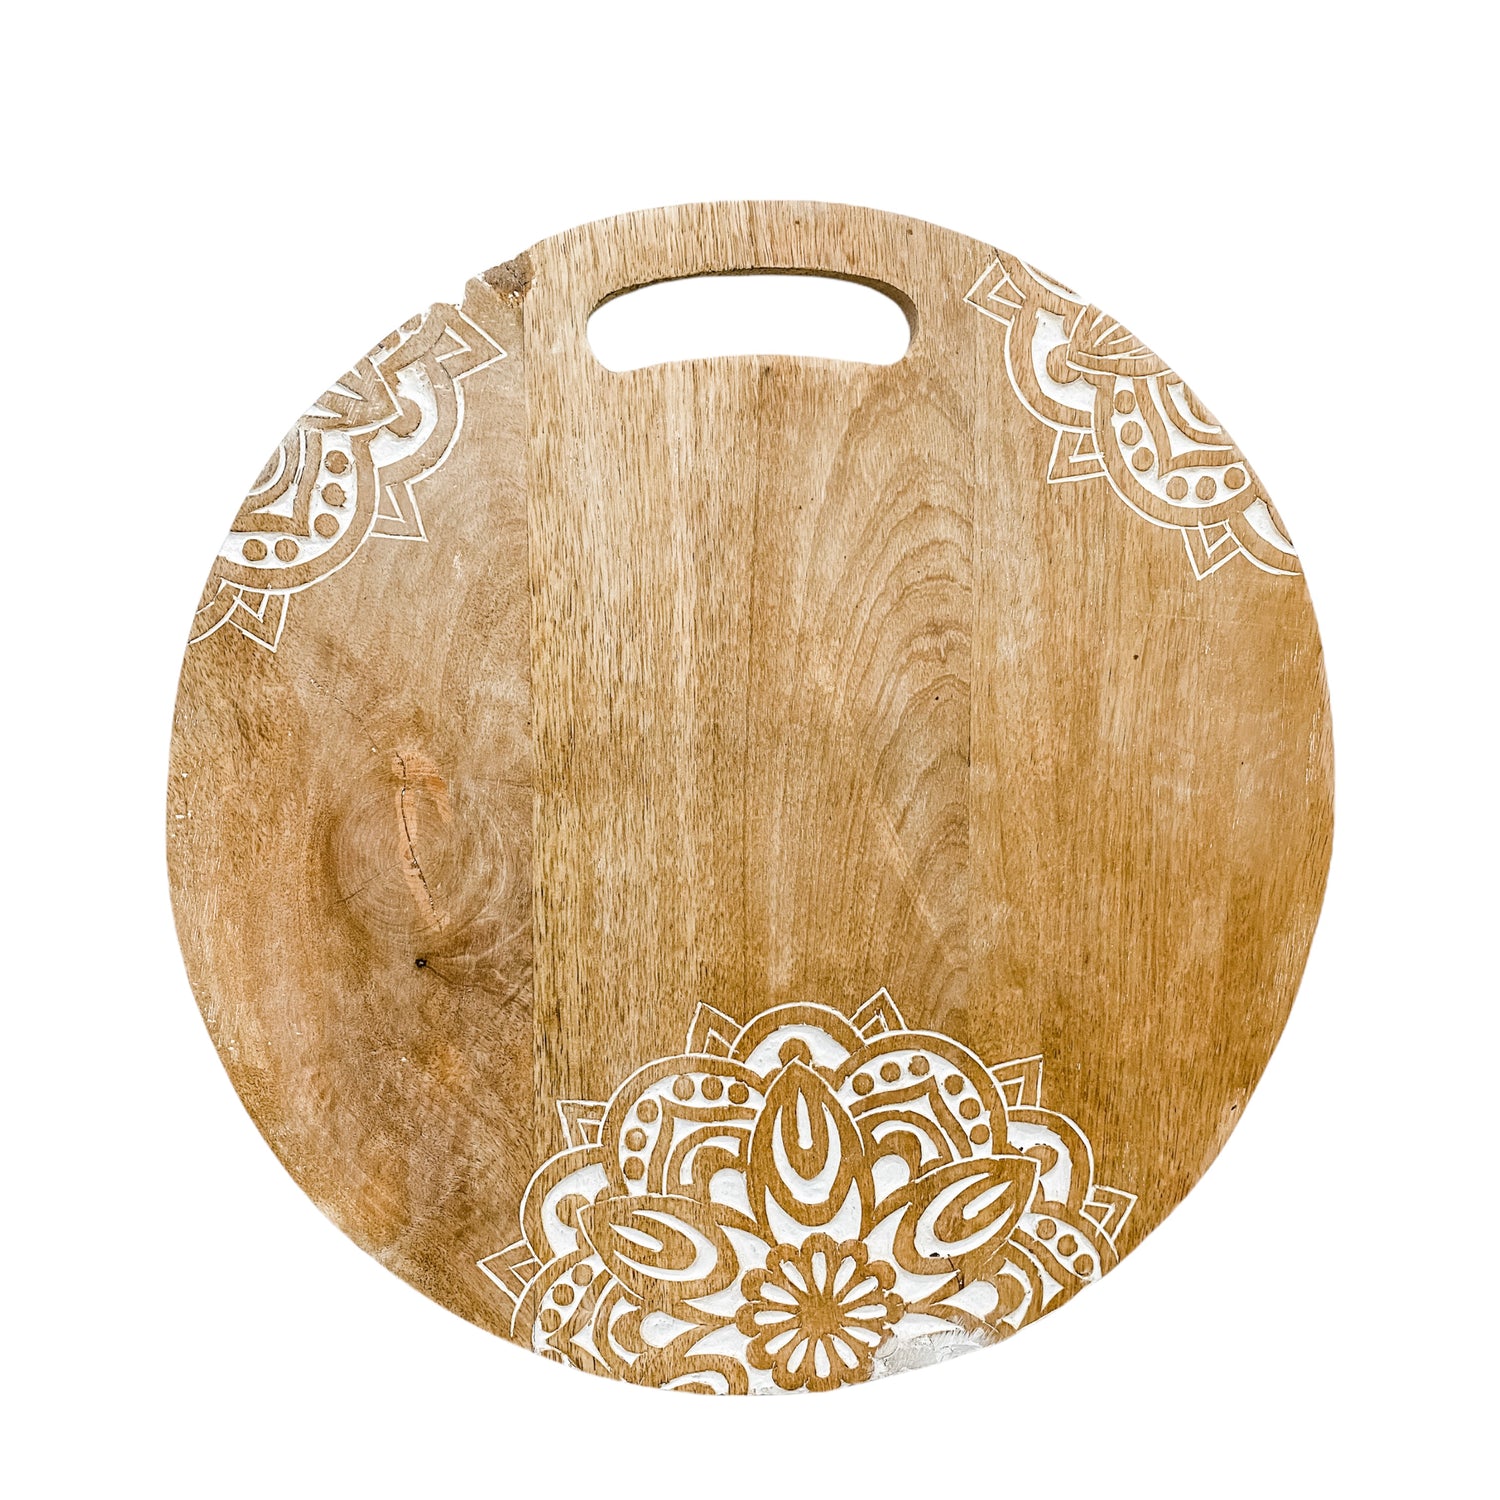 Round Wood Board featuring white mandala